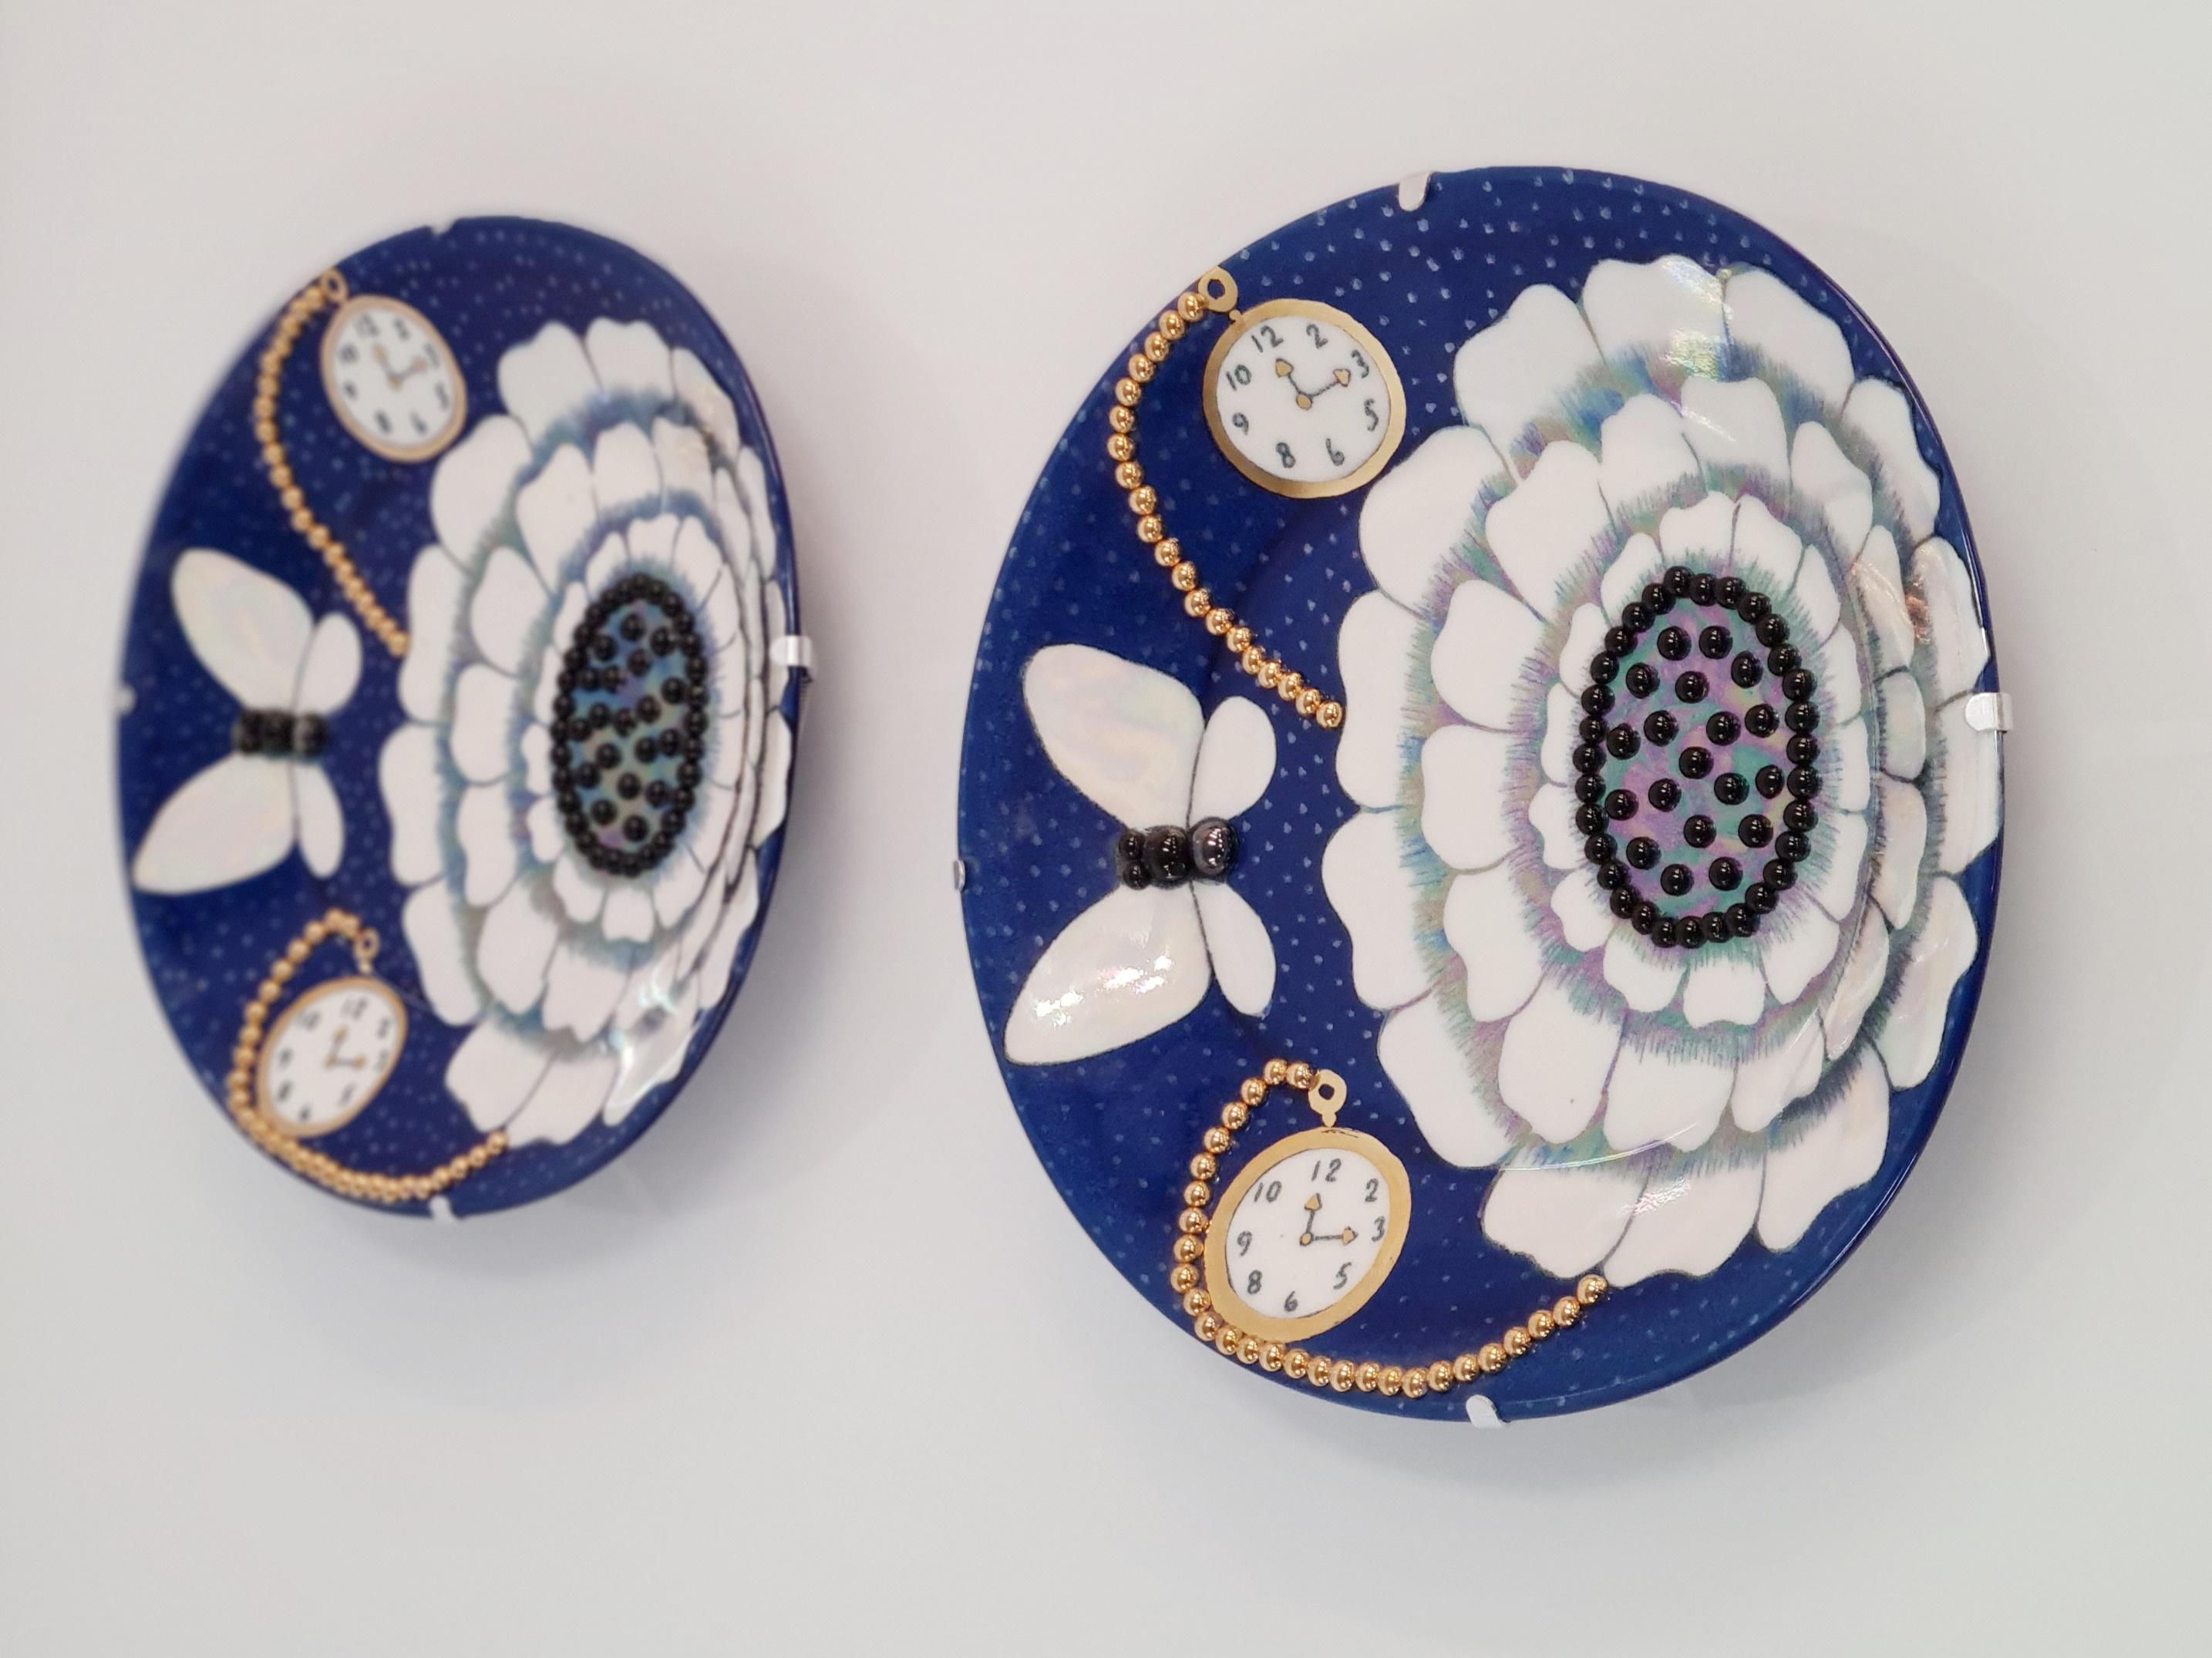 Finnish Pair of Decorative Plates by Birger Kaipiainen, Arabia